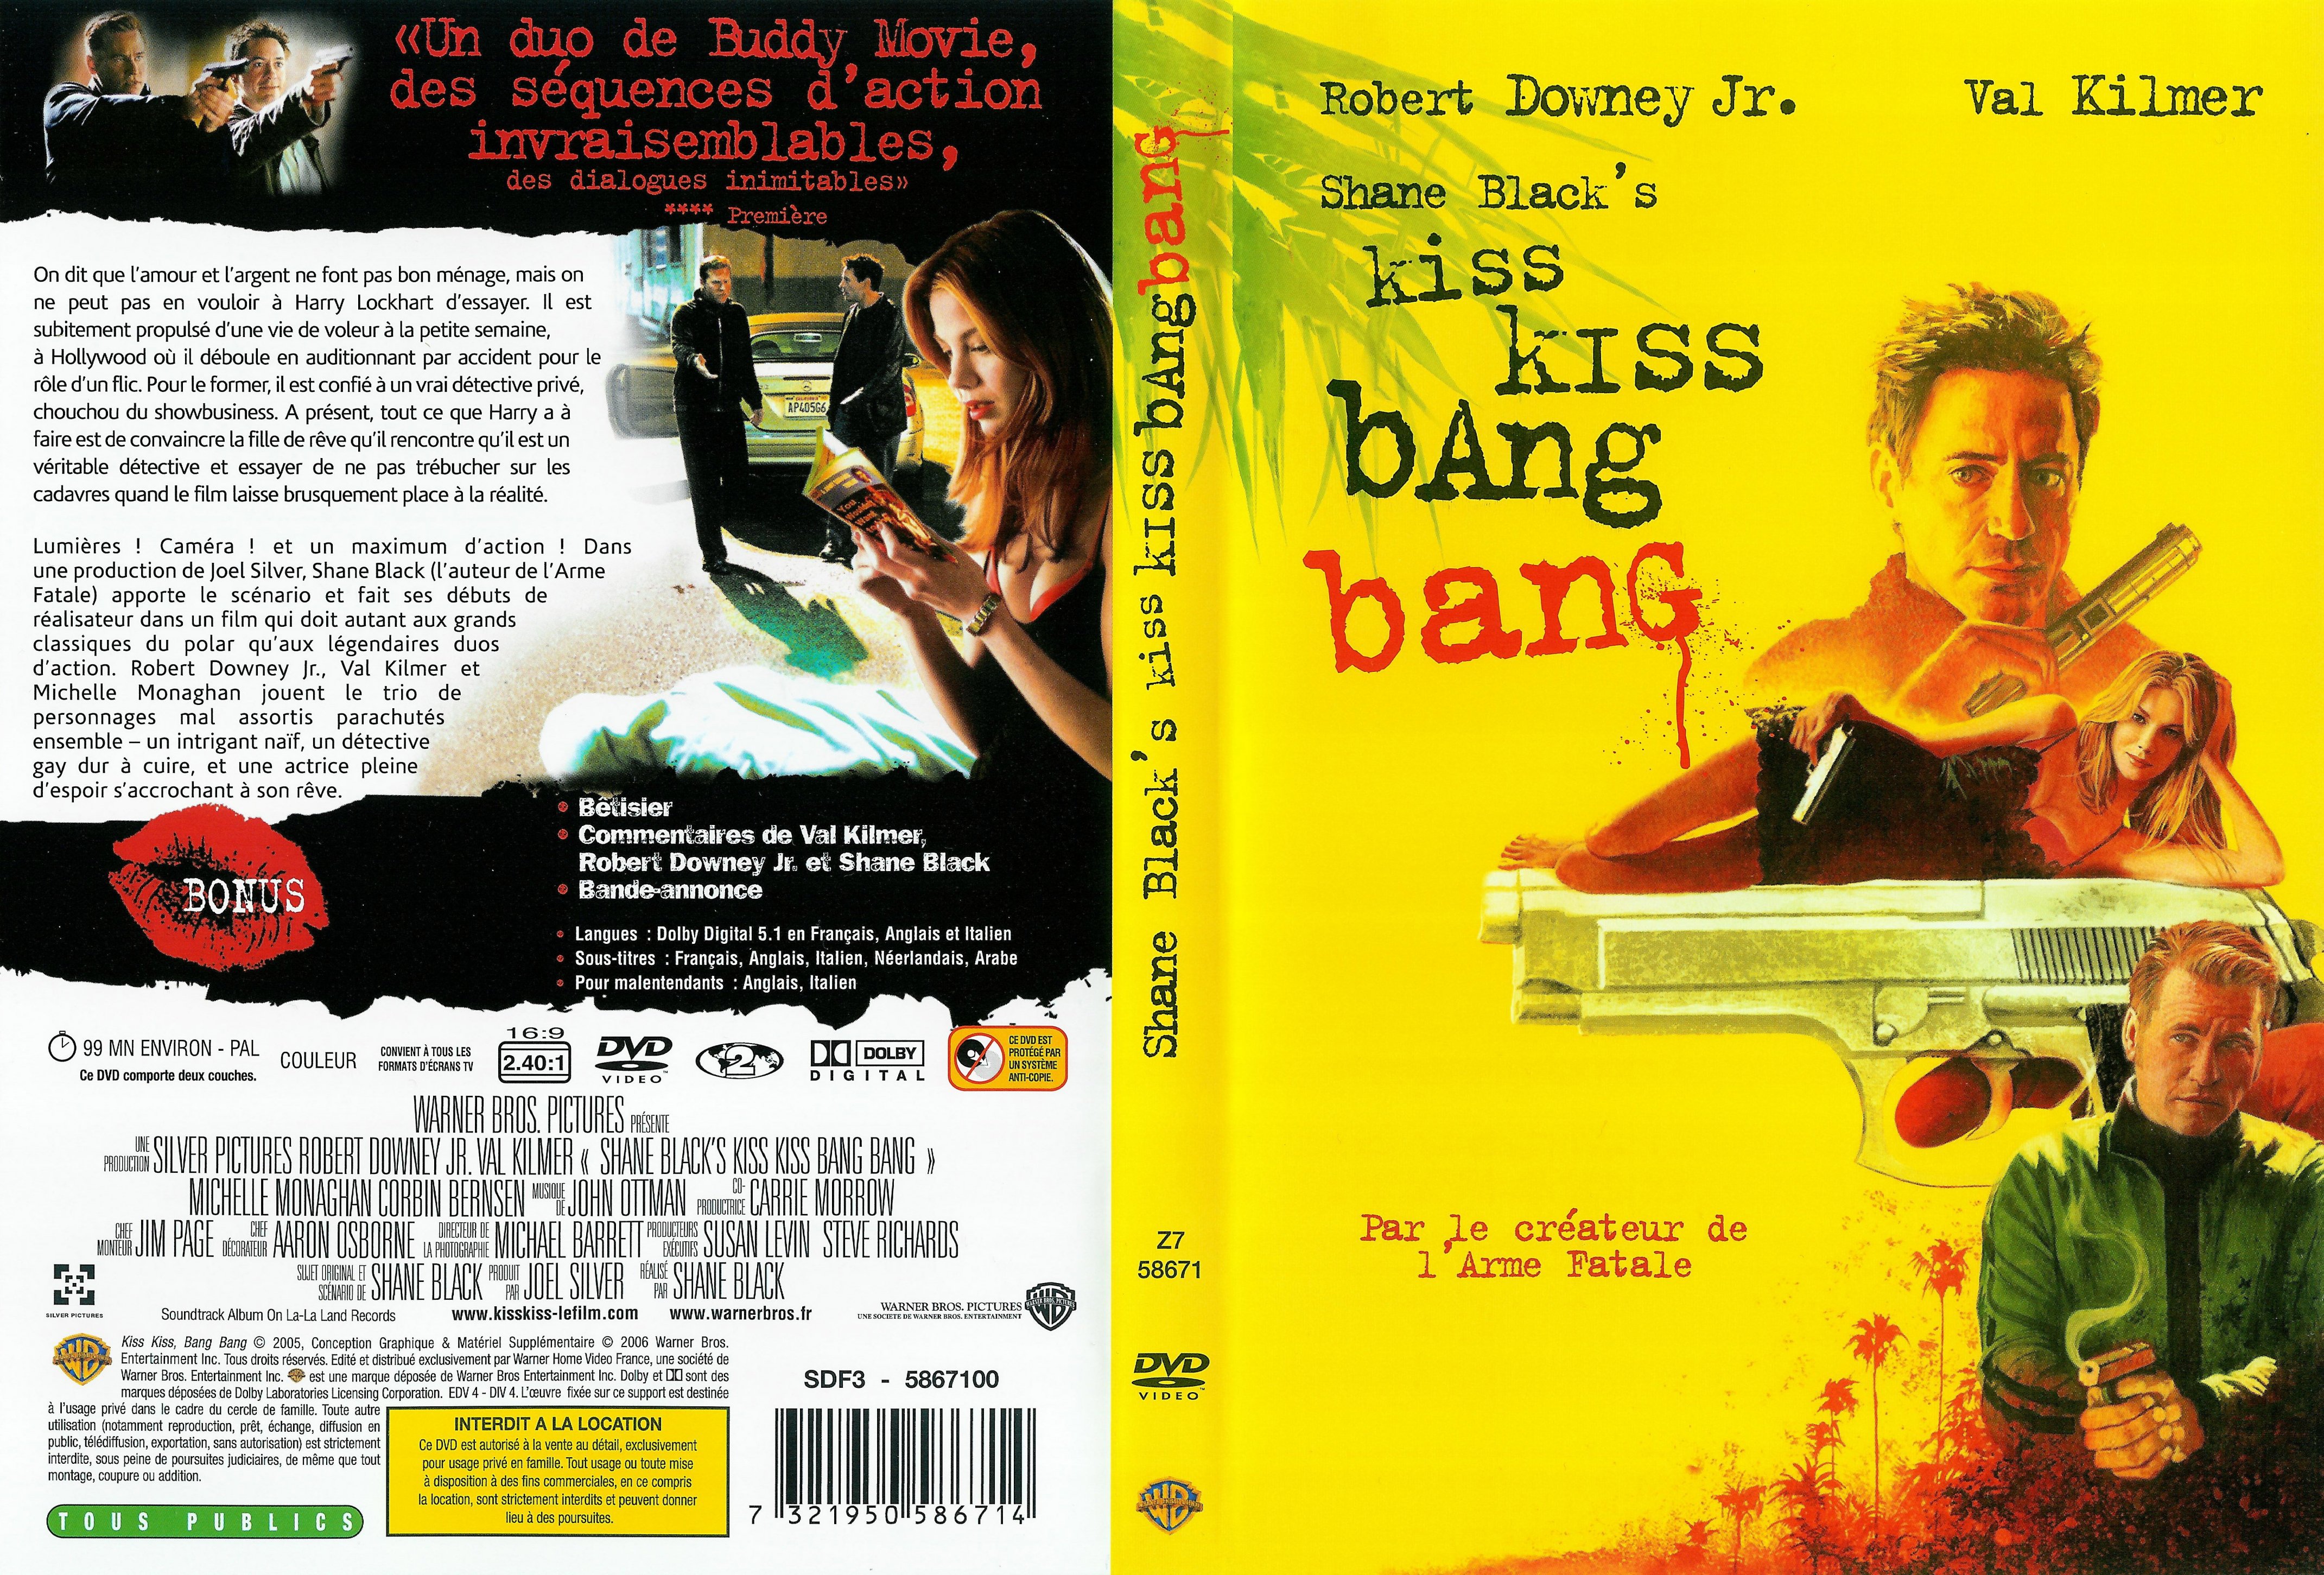 Jaquette DVD Kiss kiss bang bang (Shane Black) v2